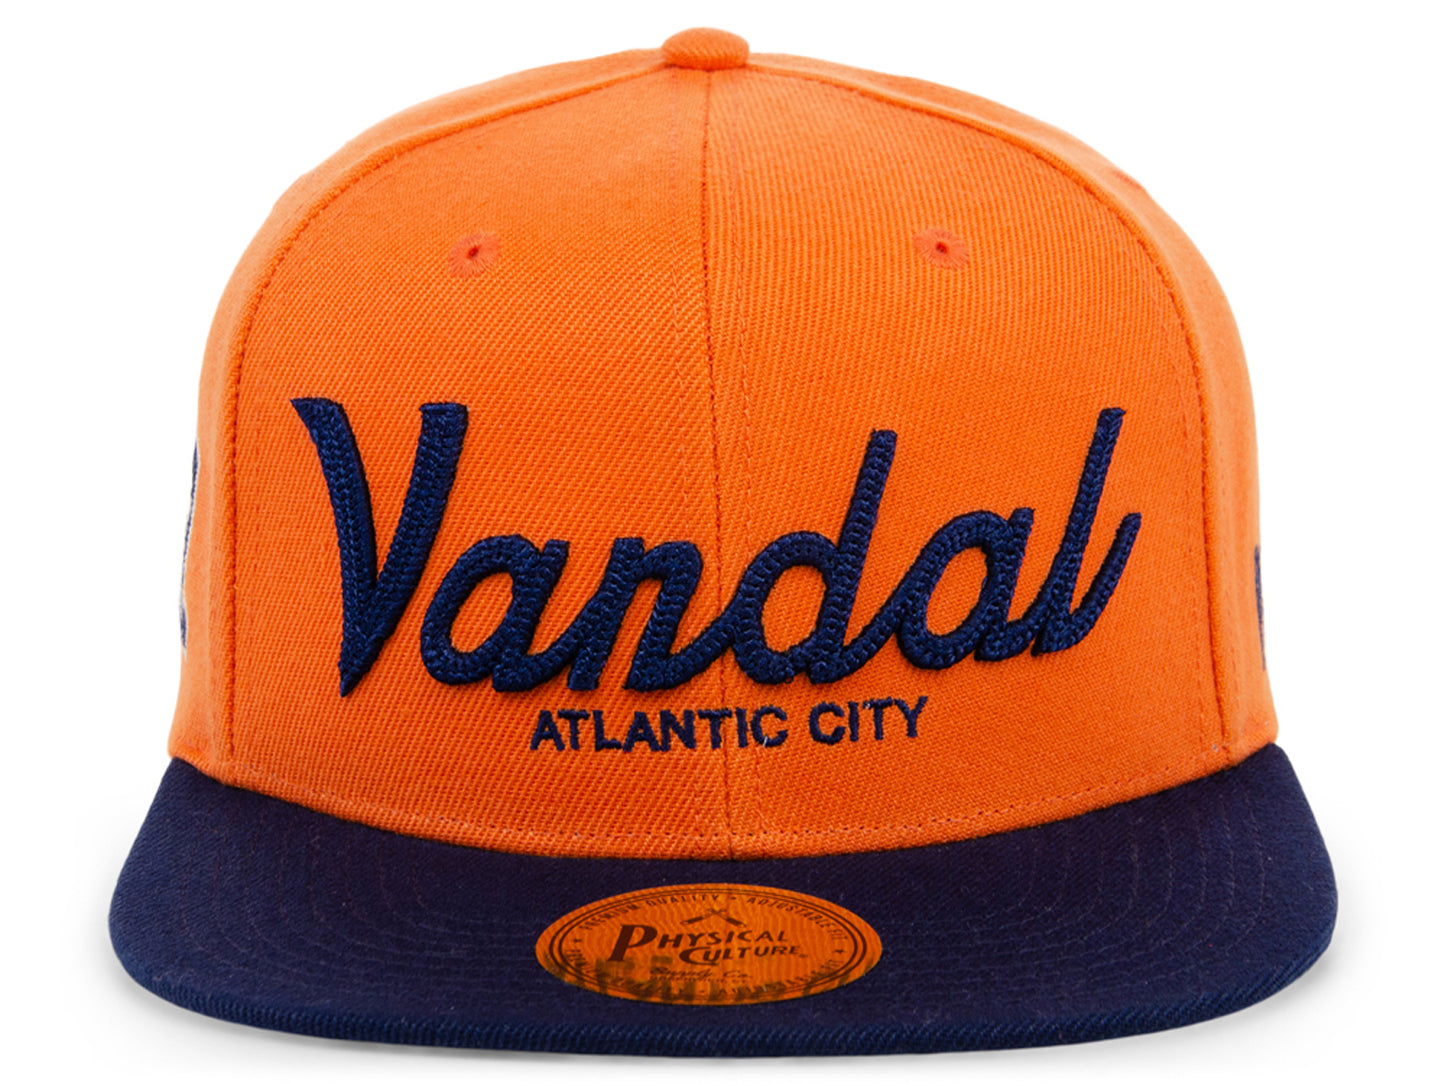 Vandal Athletic Club Snapback Cap